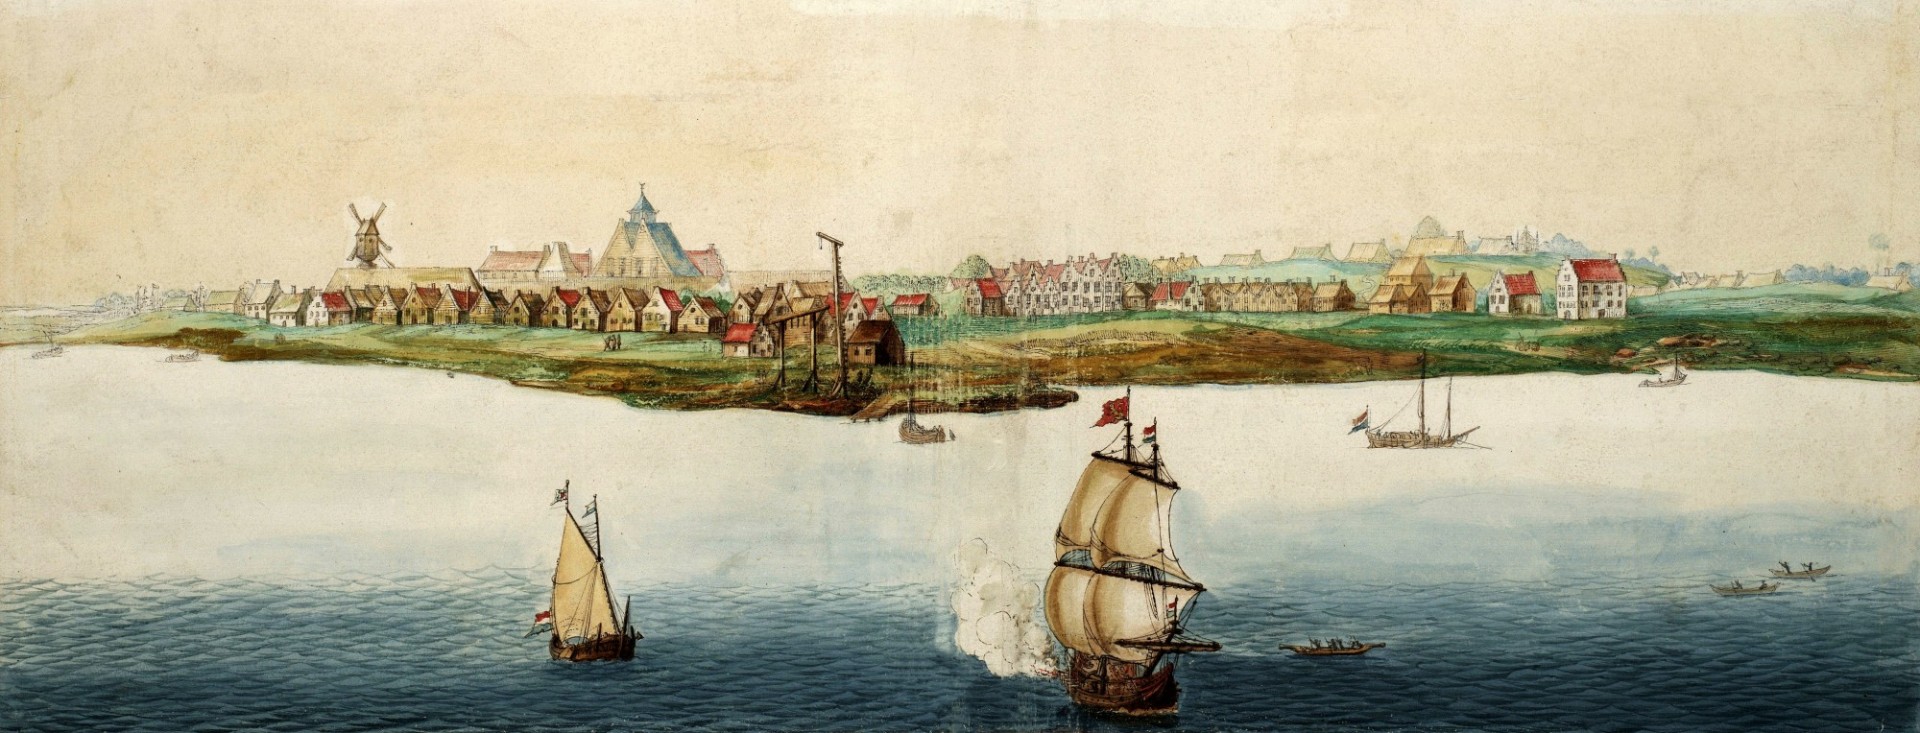 New Amsterdam, 1664